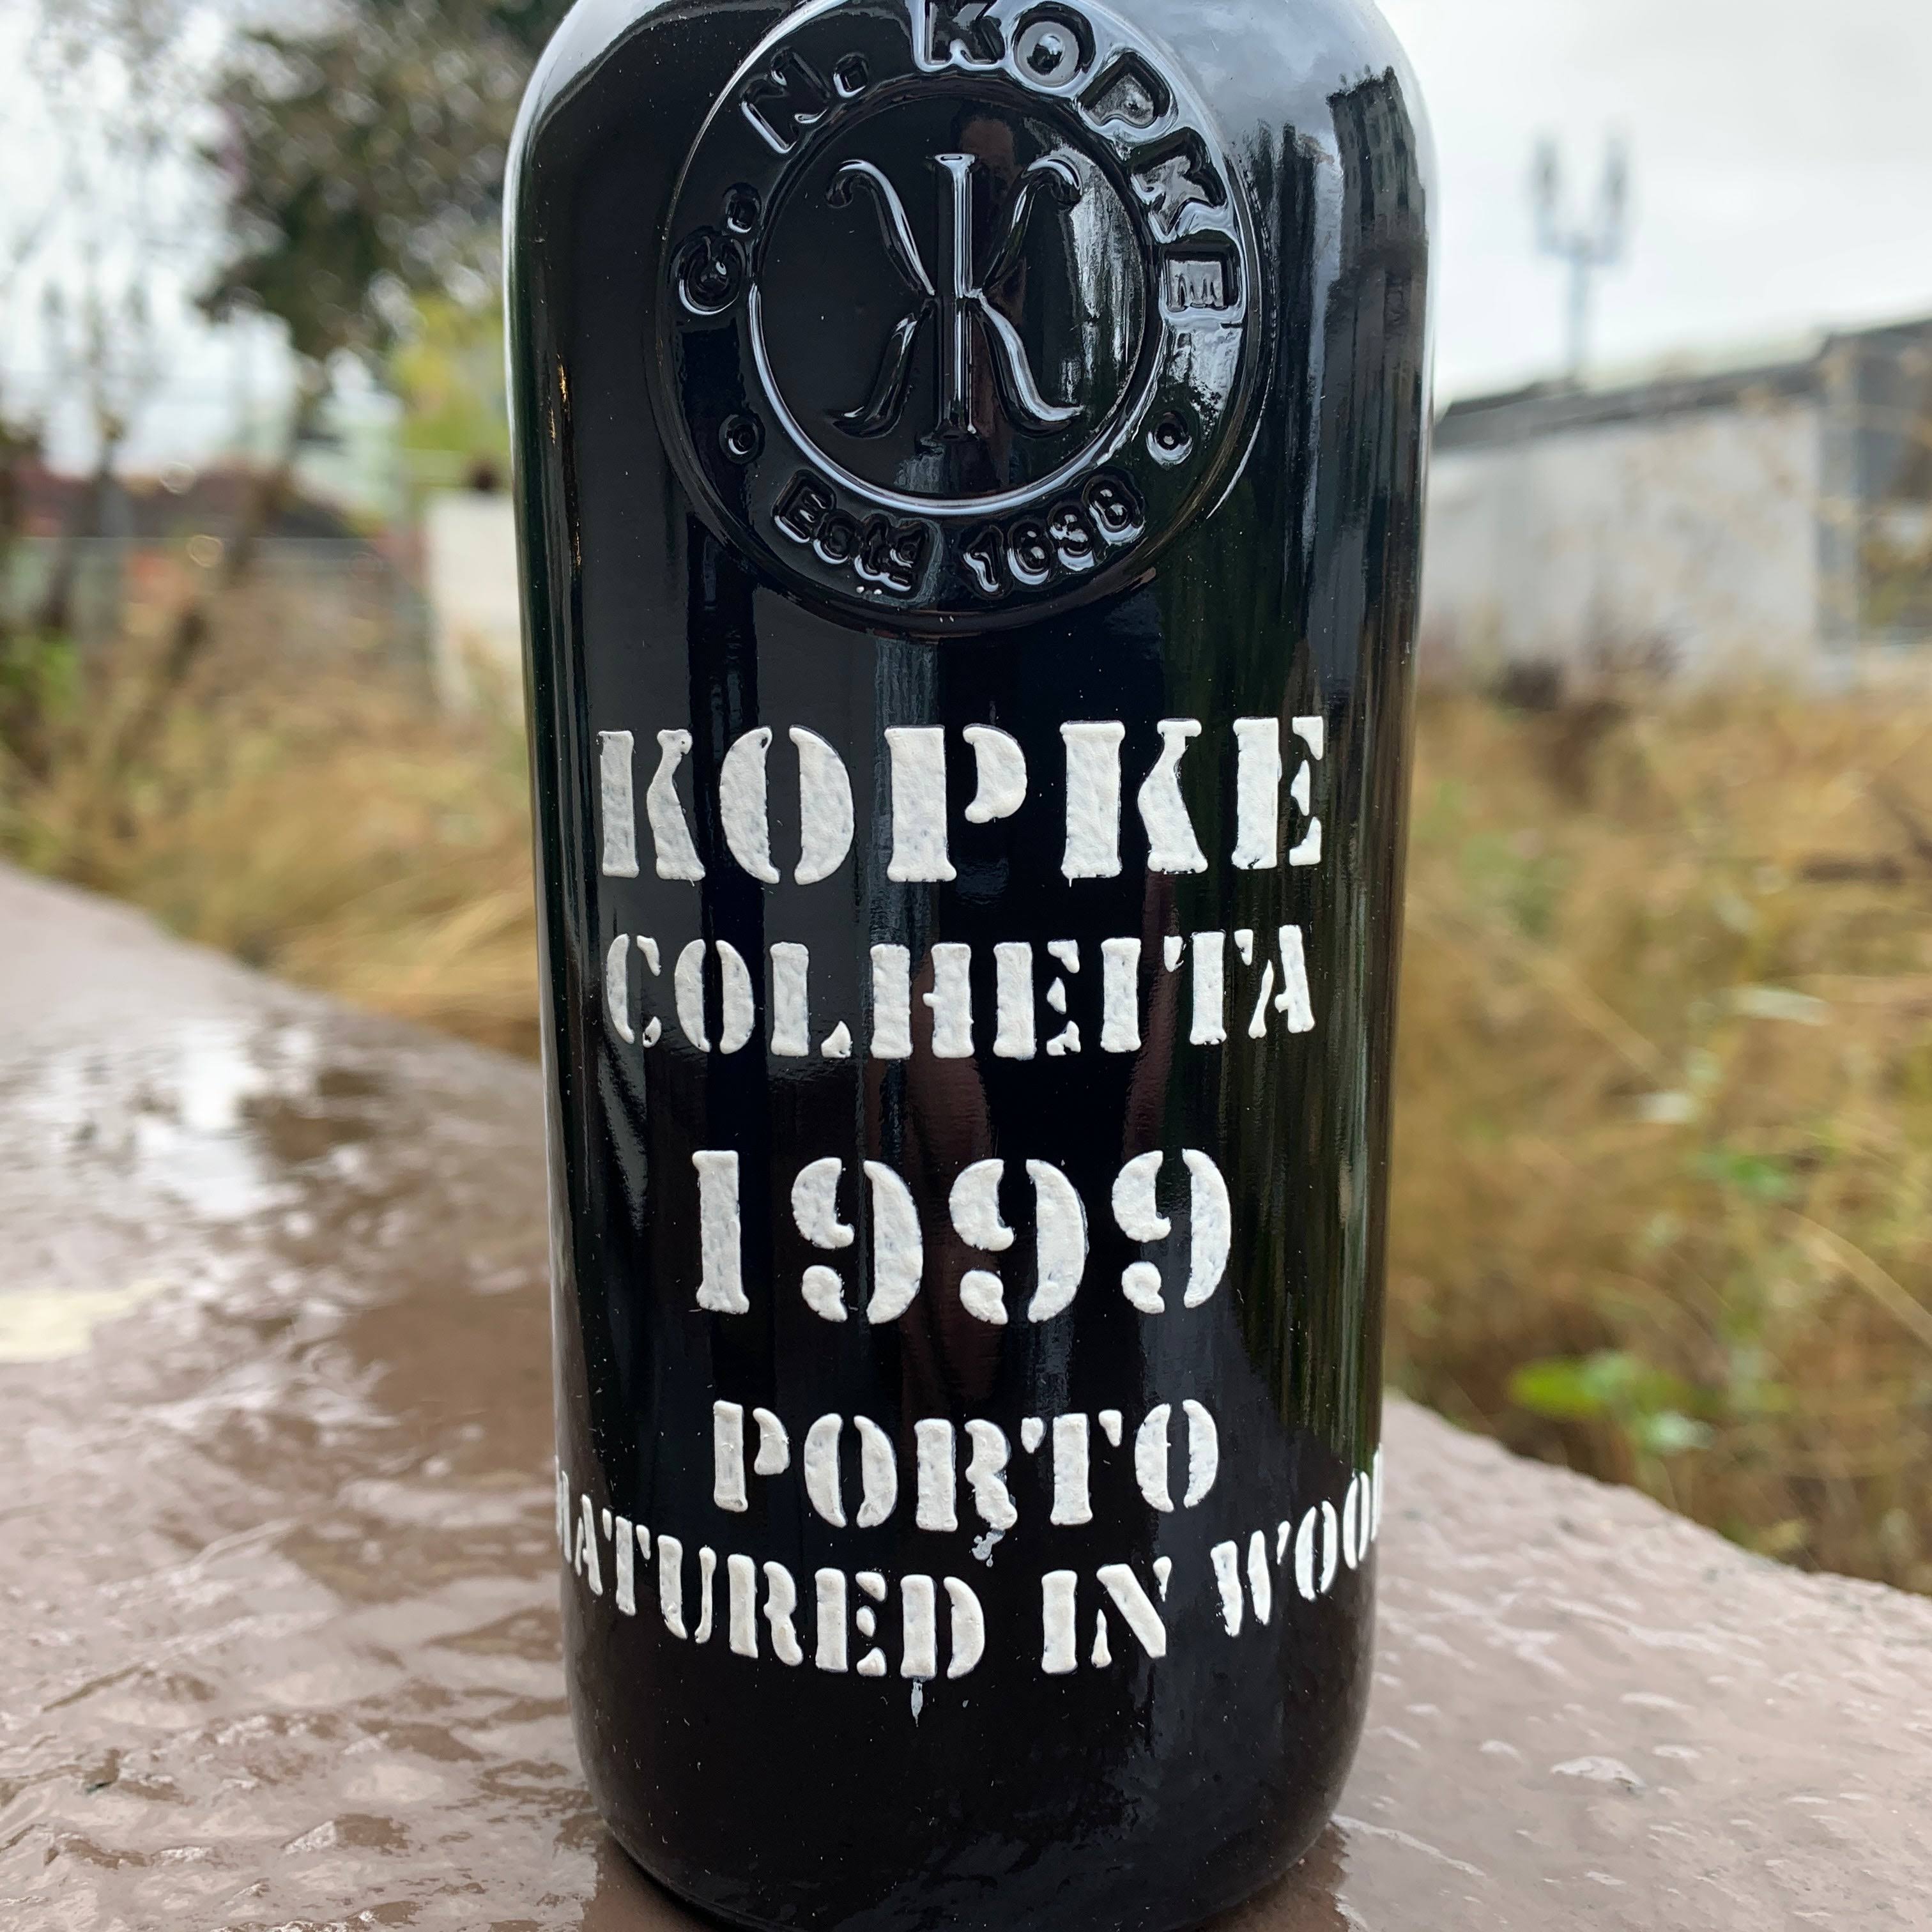 Kopke Colheita 1999 - Portugal